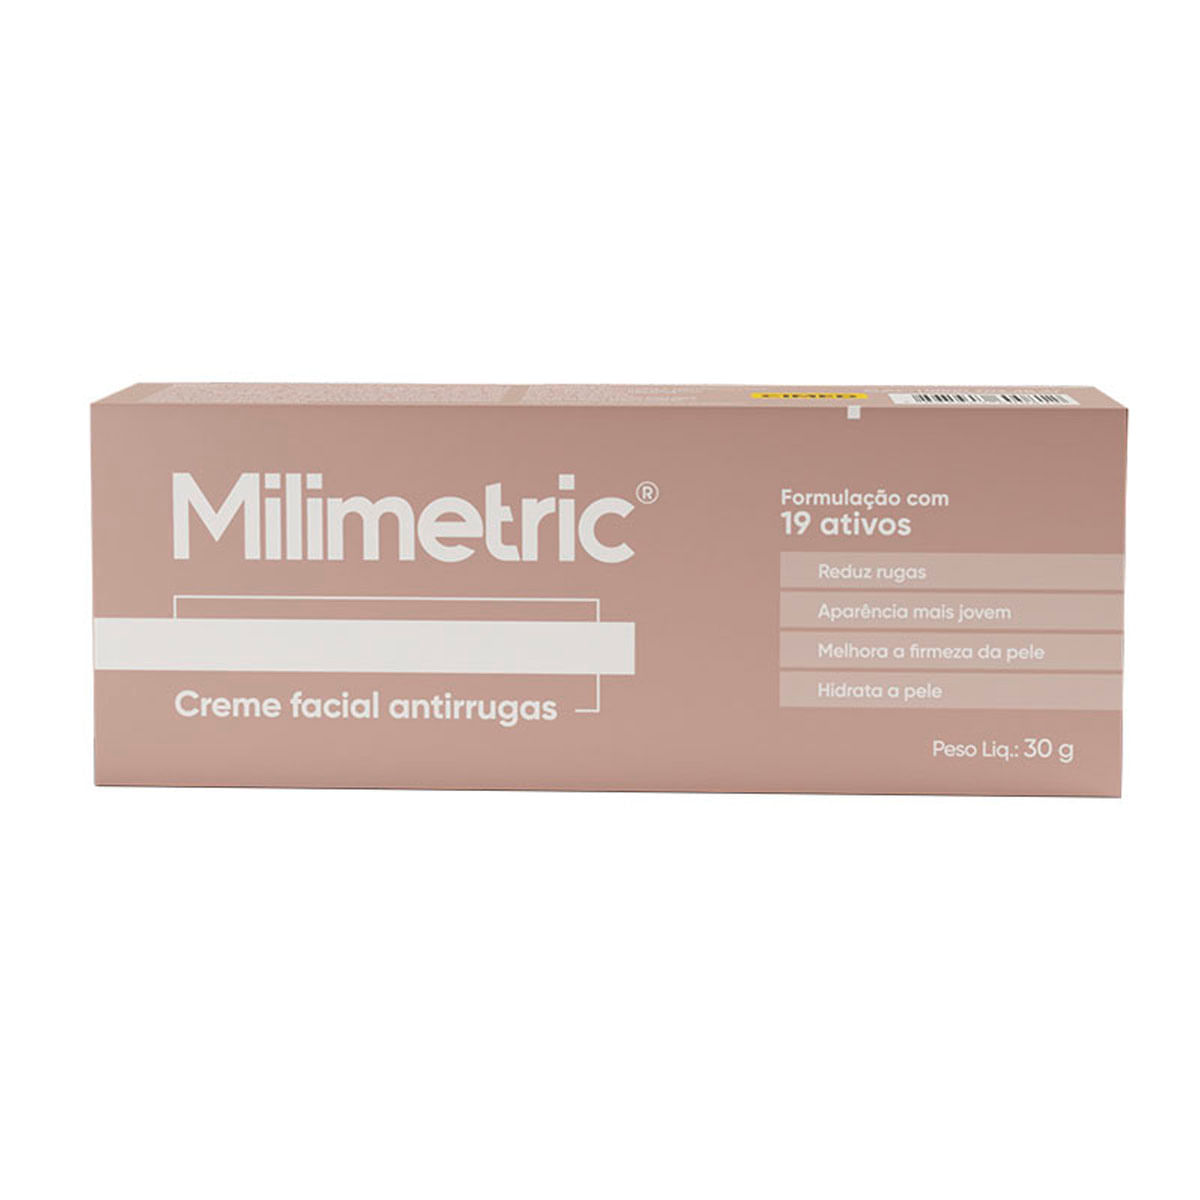 Milimetric Creme Facial Antirrugas 30g CIMED